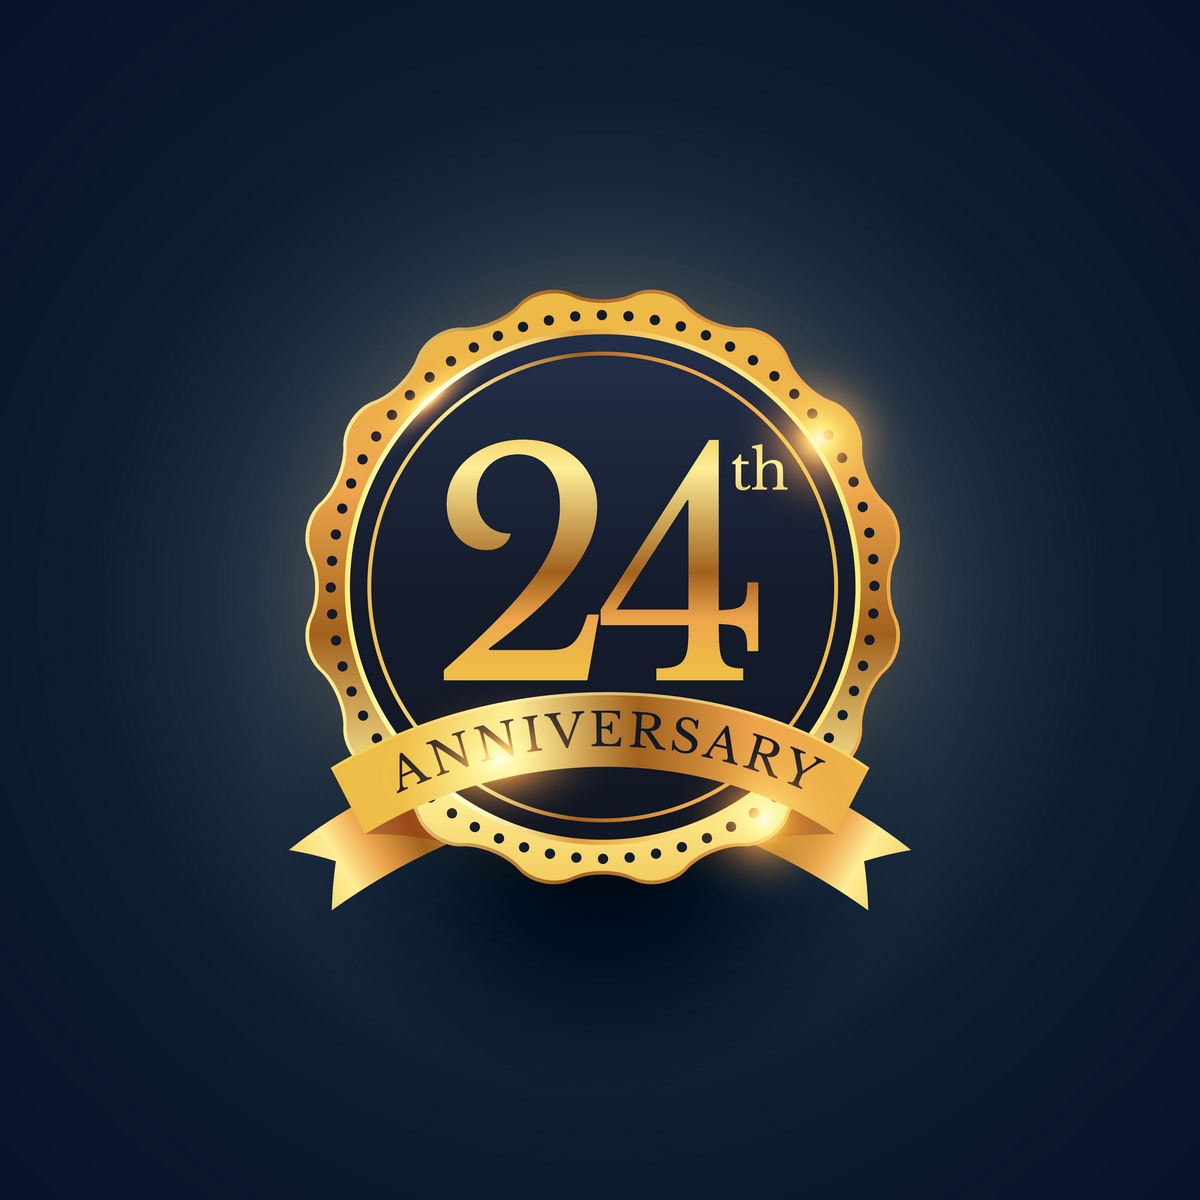 24th anniversary celebration badge label in golden color